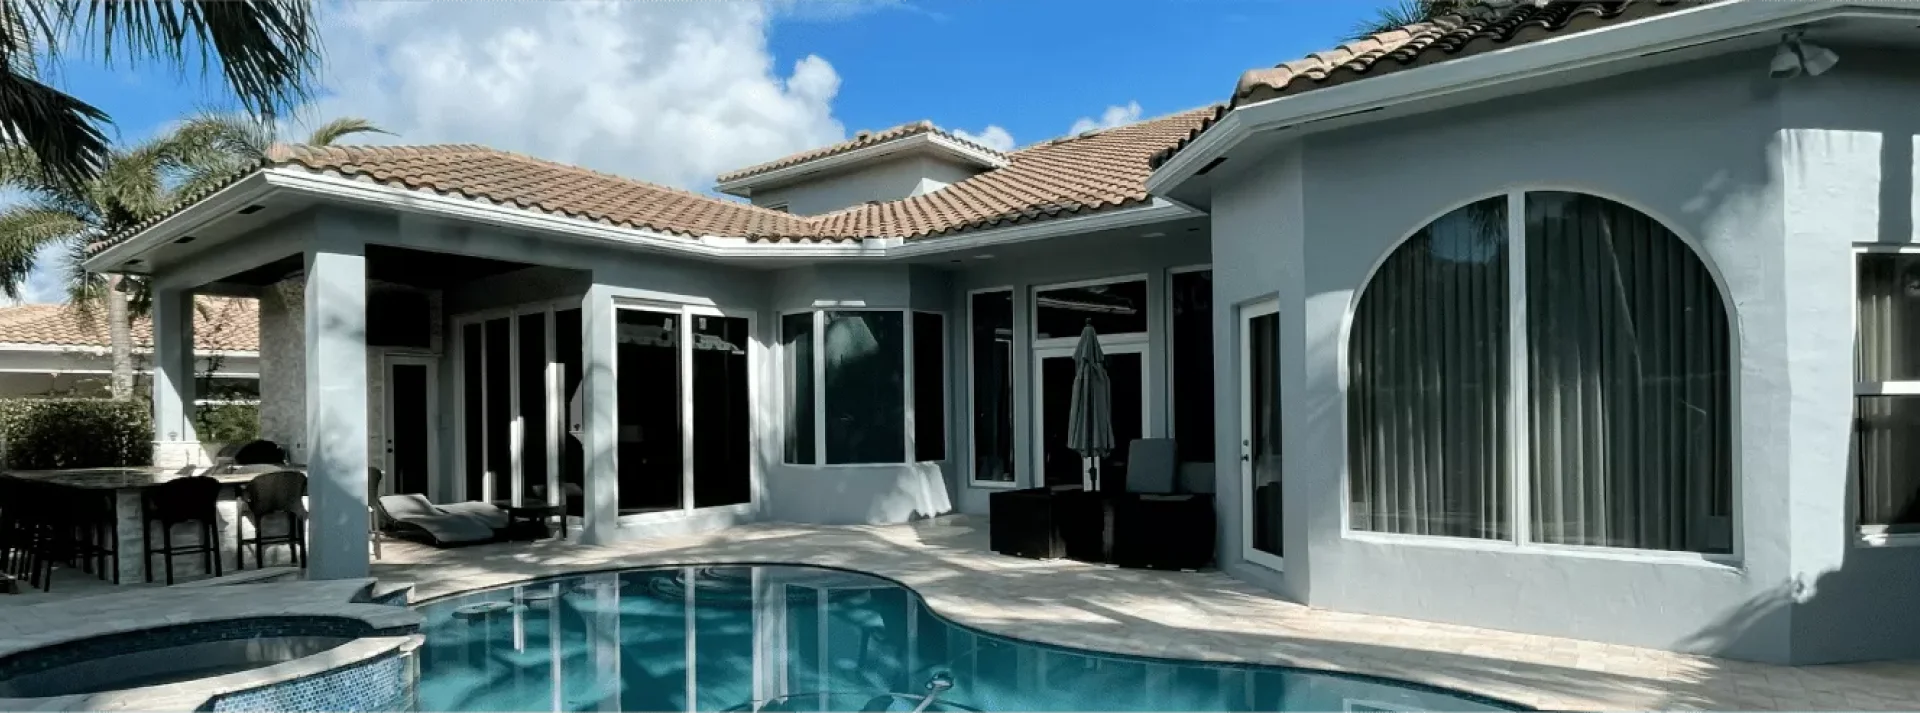 Pool House with Impact Windows